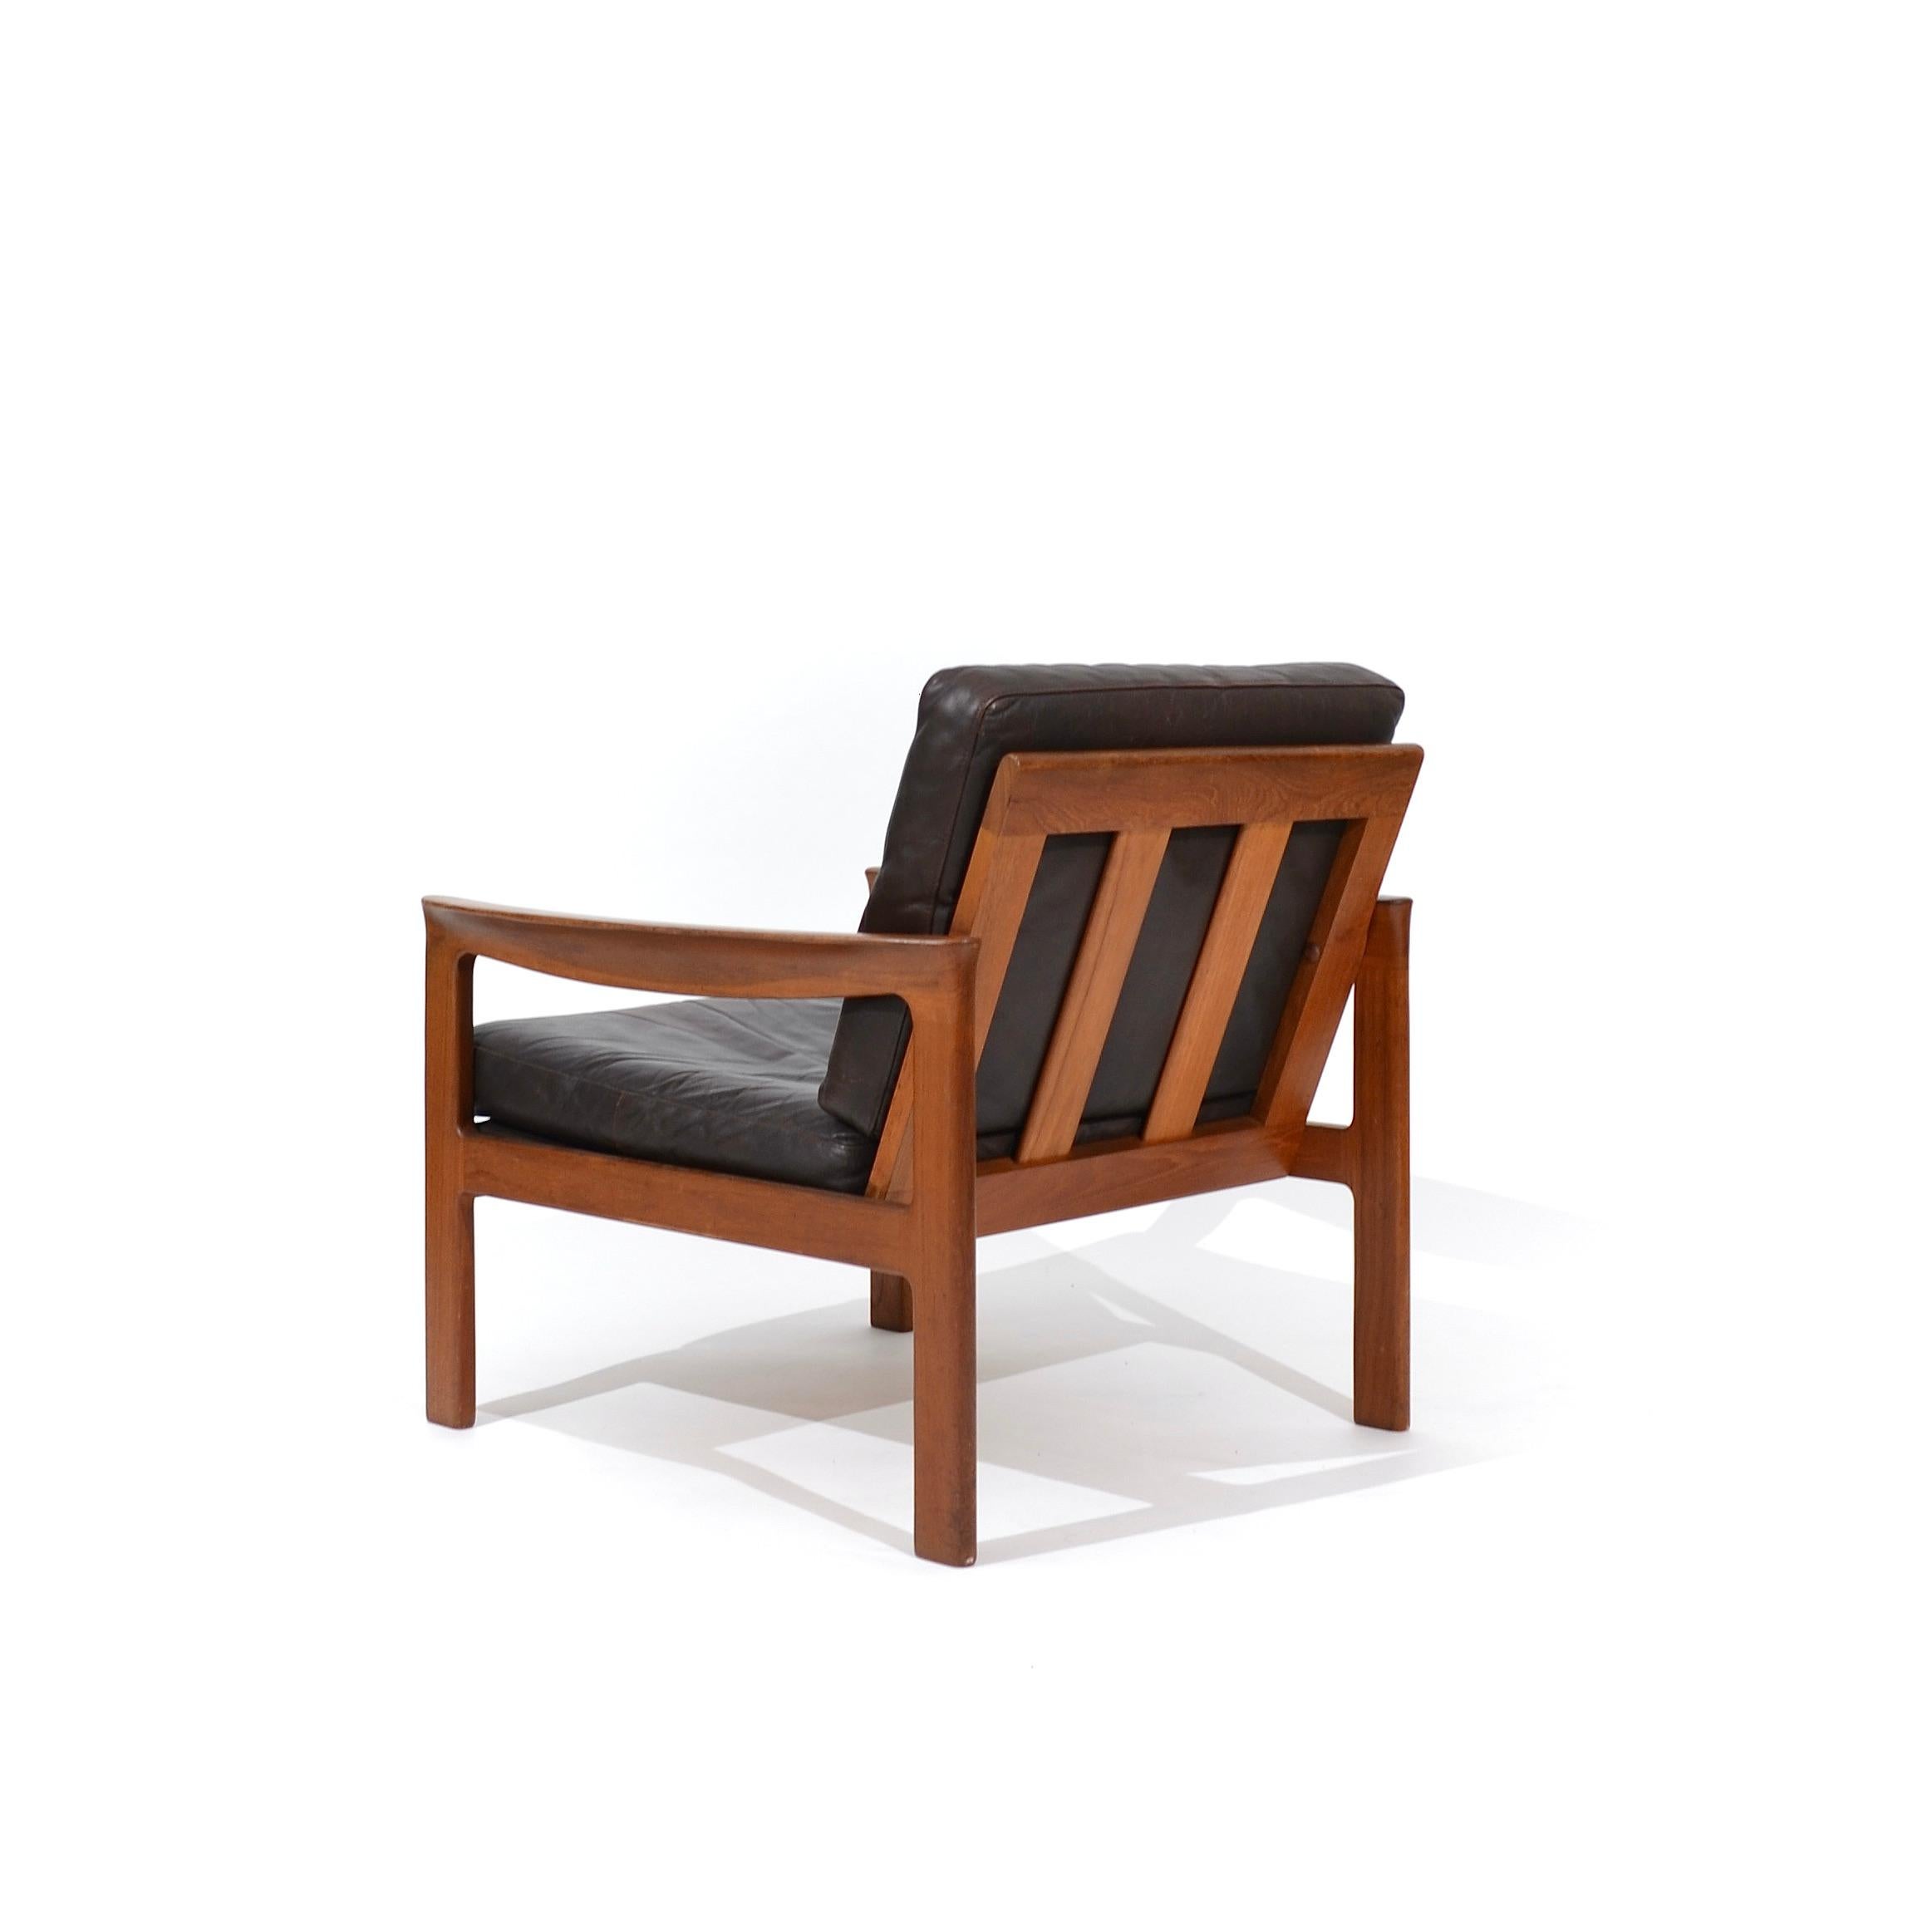 Danish Leather and teak armchair, Arne Wahl Iversen, Komfort, Denmark, 1960's For Sale